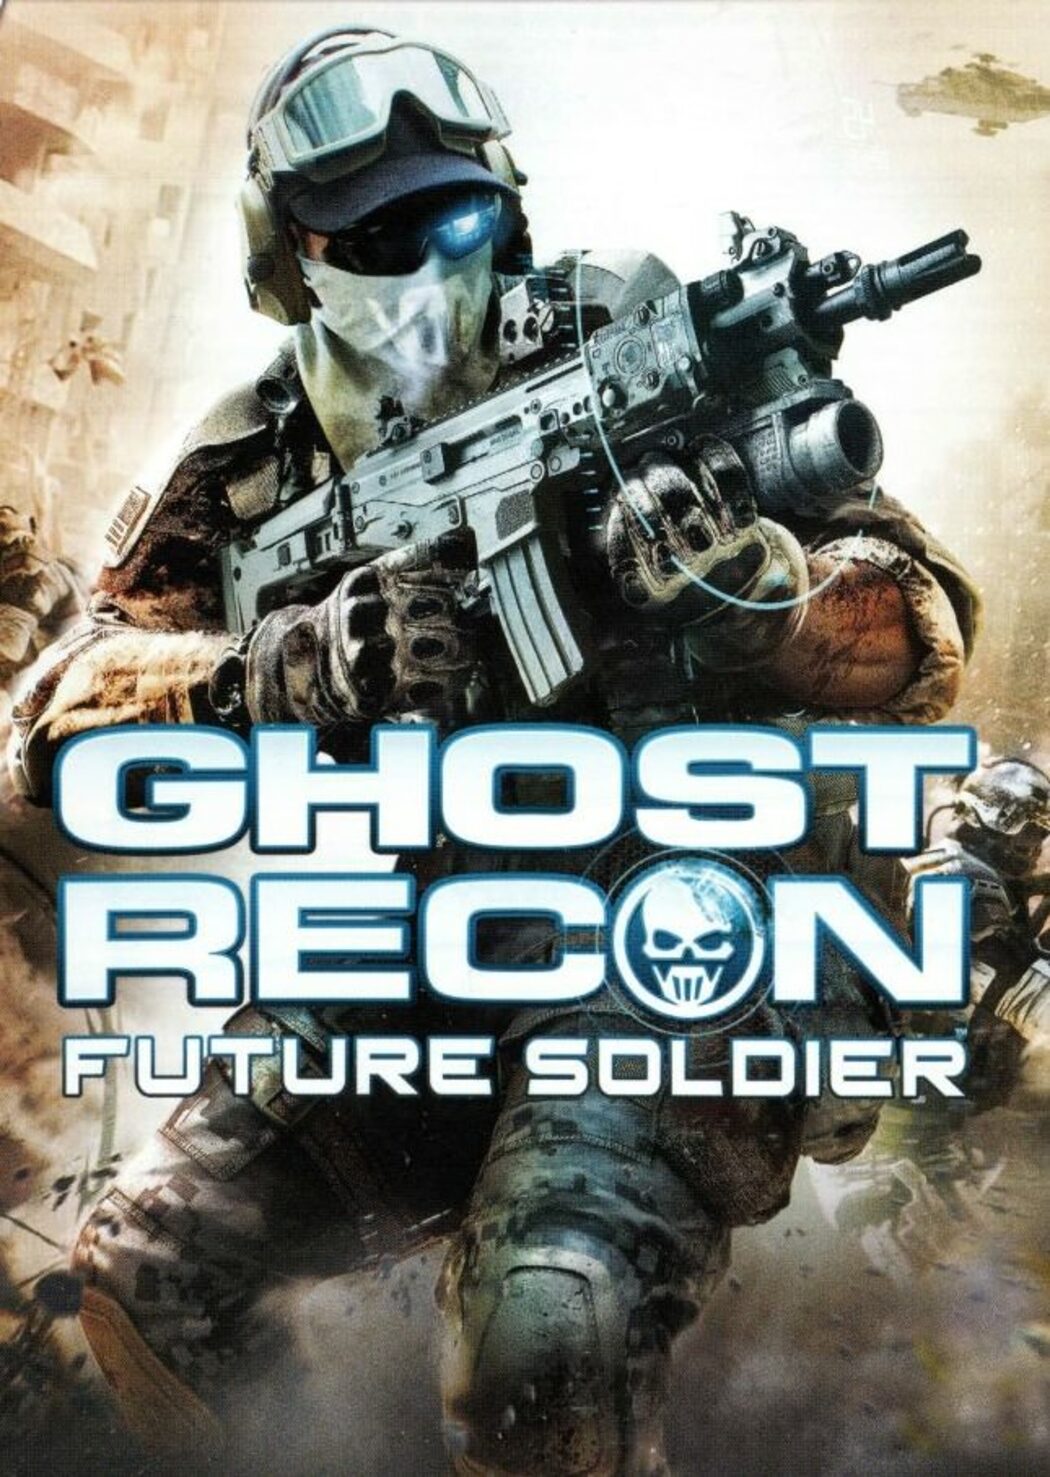 ghost recon future soldier release date